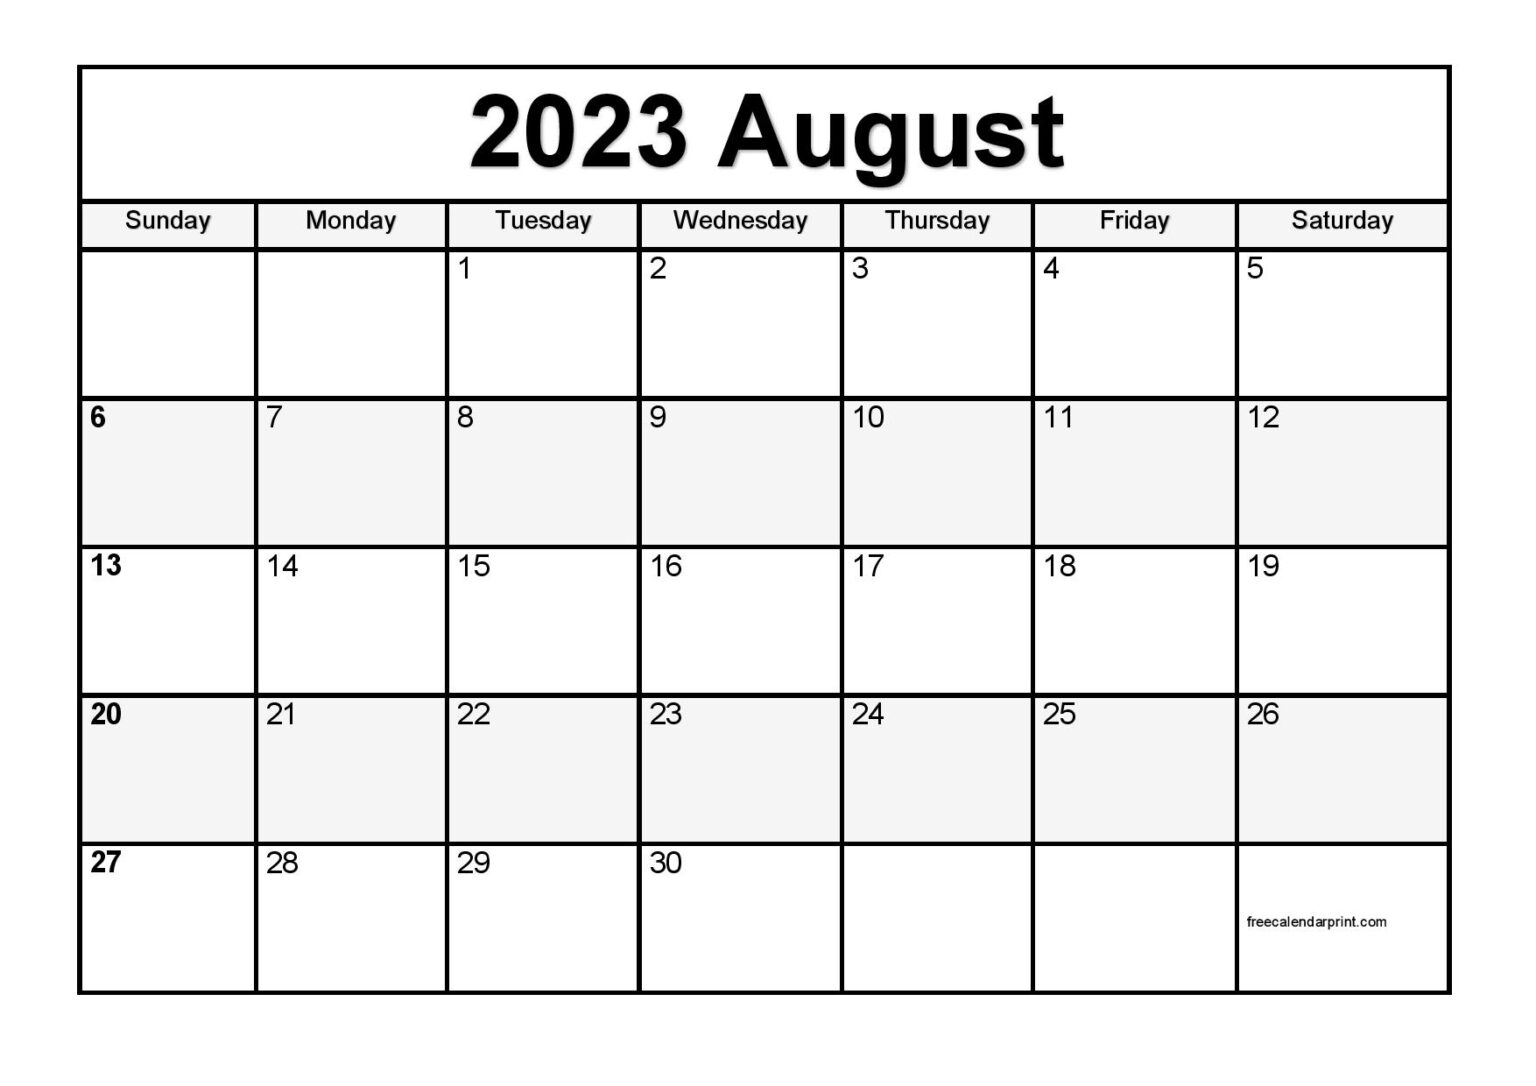 Calendar 2023 August August 2023 Vrat Tyohar Hindu Festival 2023 2023